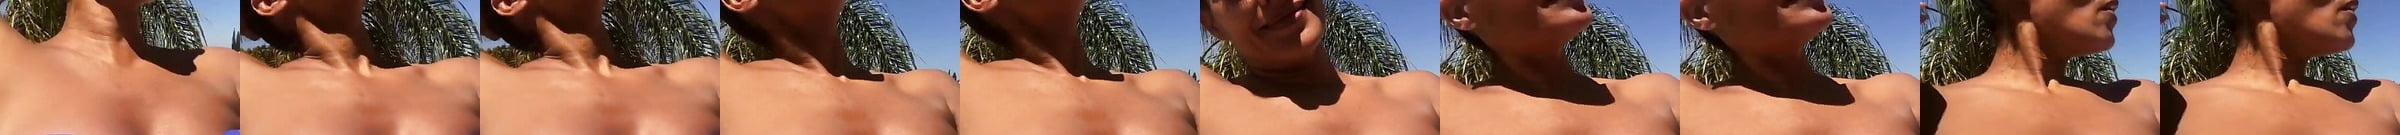 Celebrity Sex Tape Hd Porn Videos 3 Xhamster